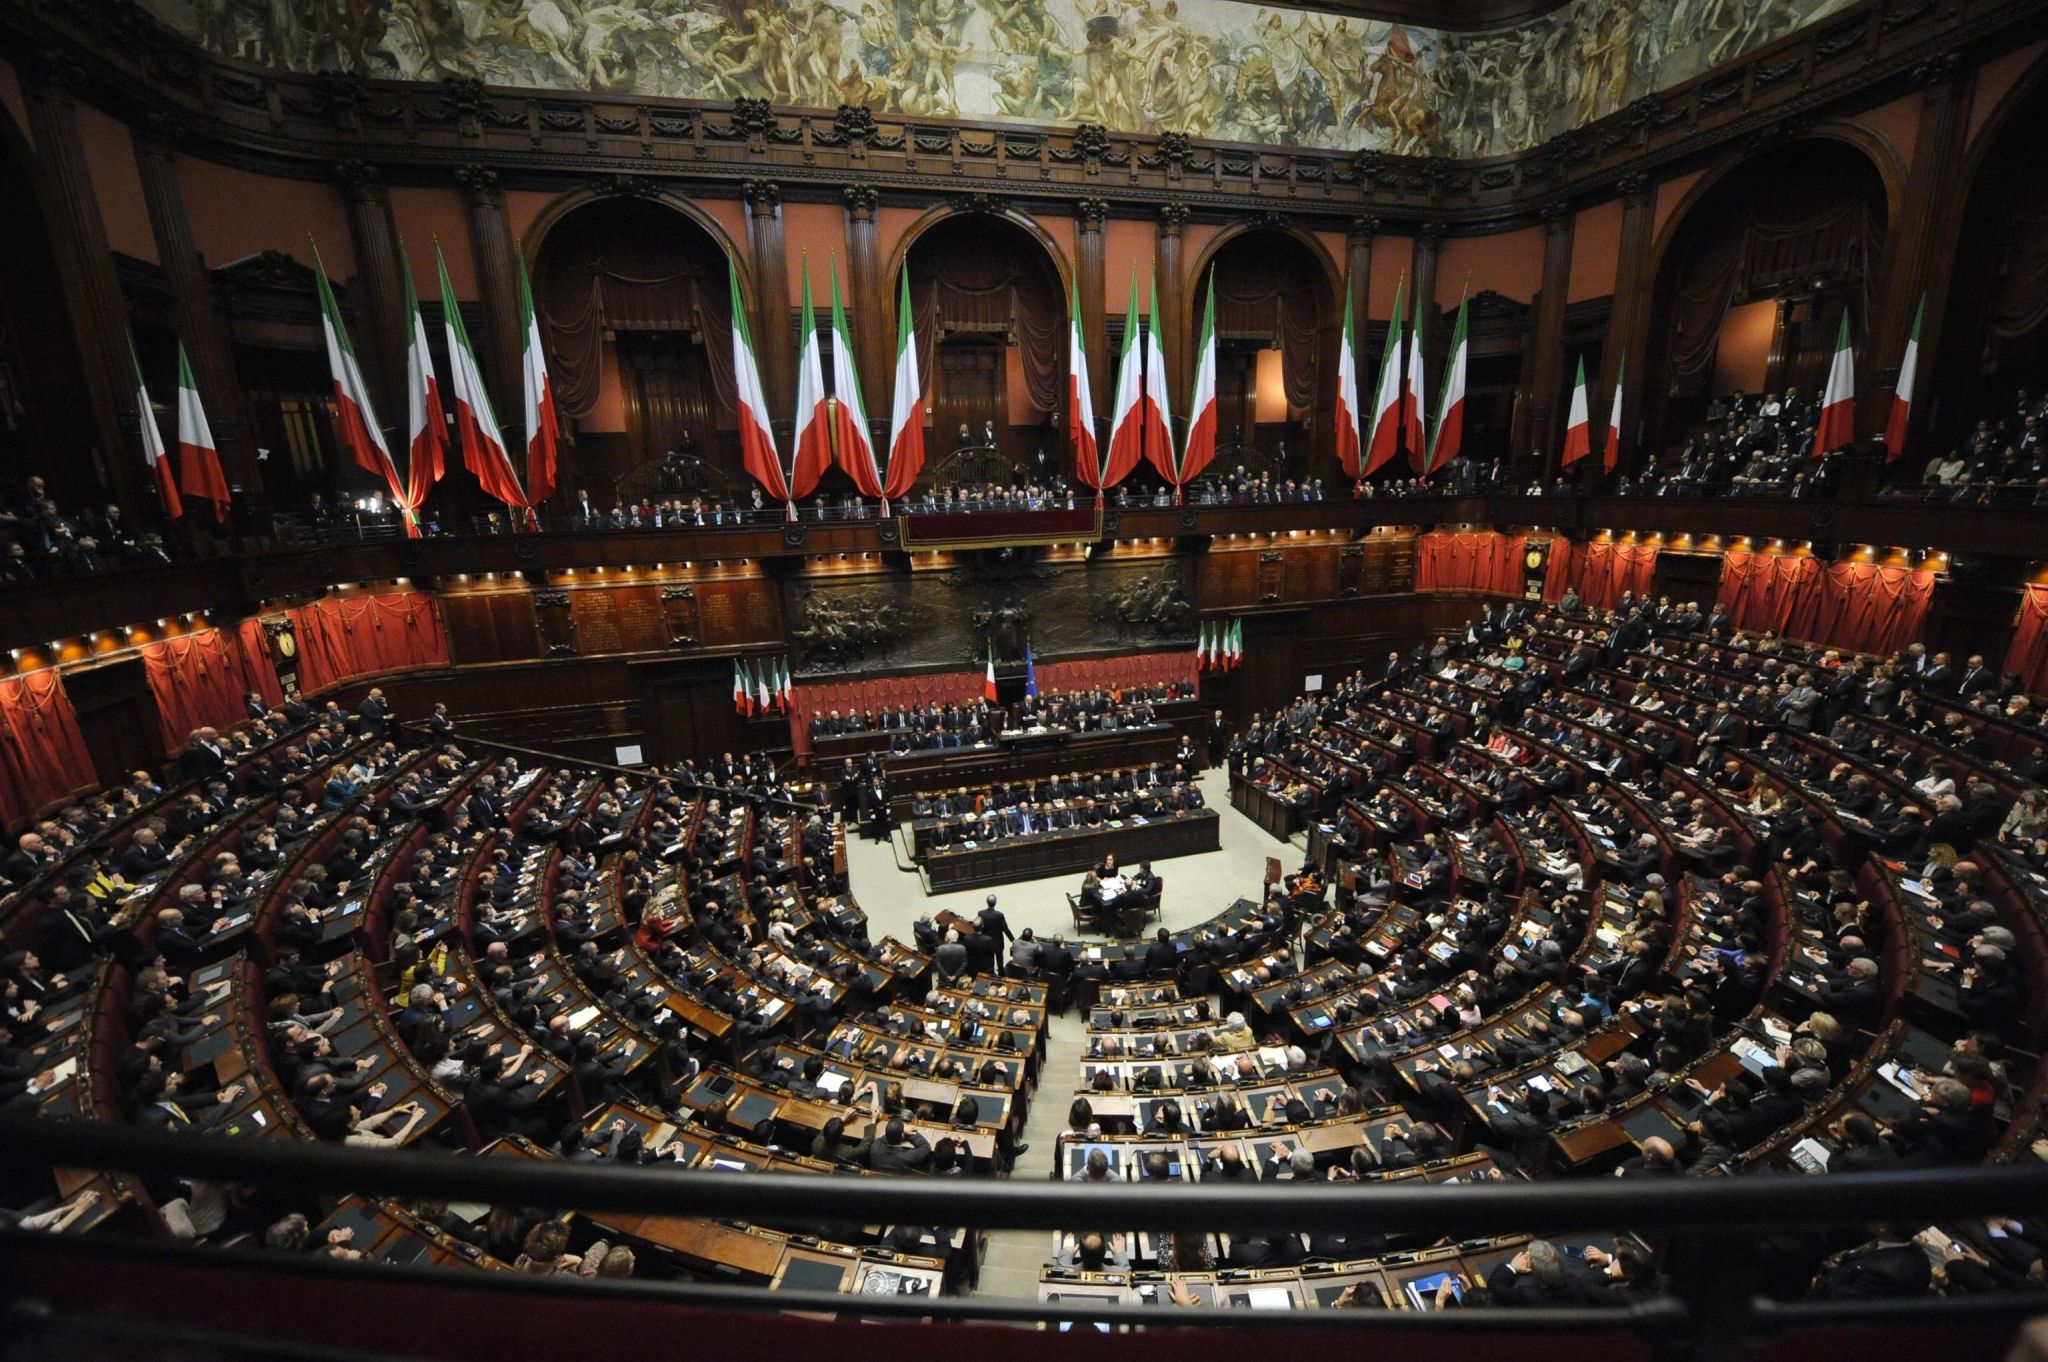 http://www.net4info.de/photos/cpg/albums/userpics/10001/Parlamento_Italiano.jpg